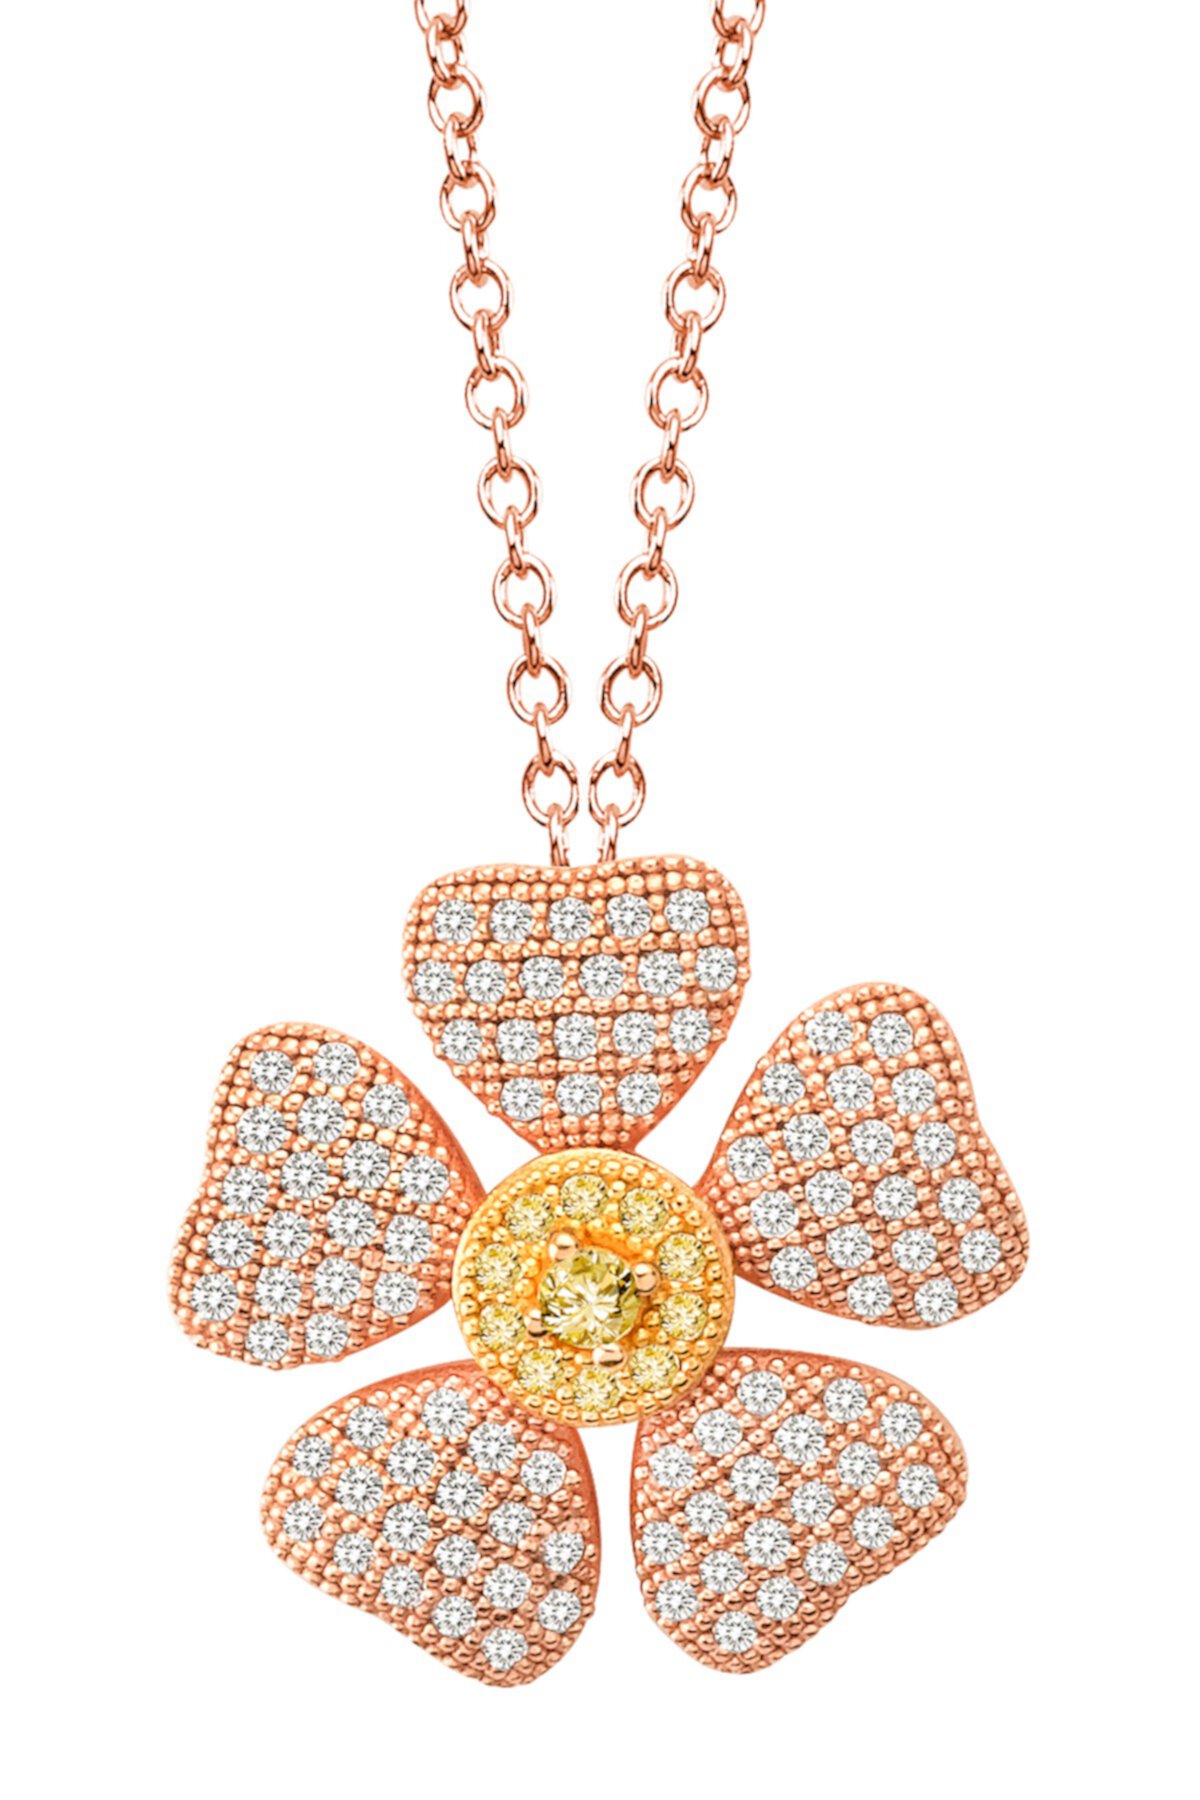 Ожерелье с подвеской в виде канарейки и белого цветка с имитацией бриллианта с микро-паве LaFonn